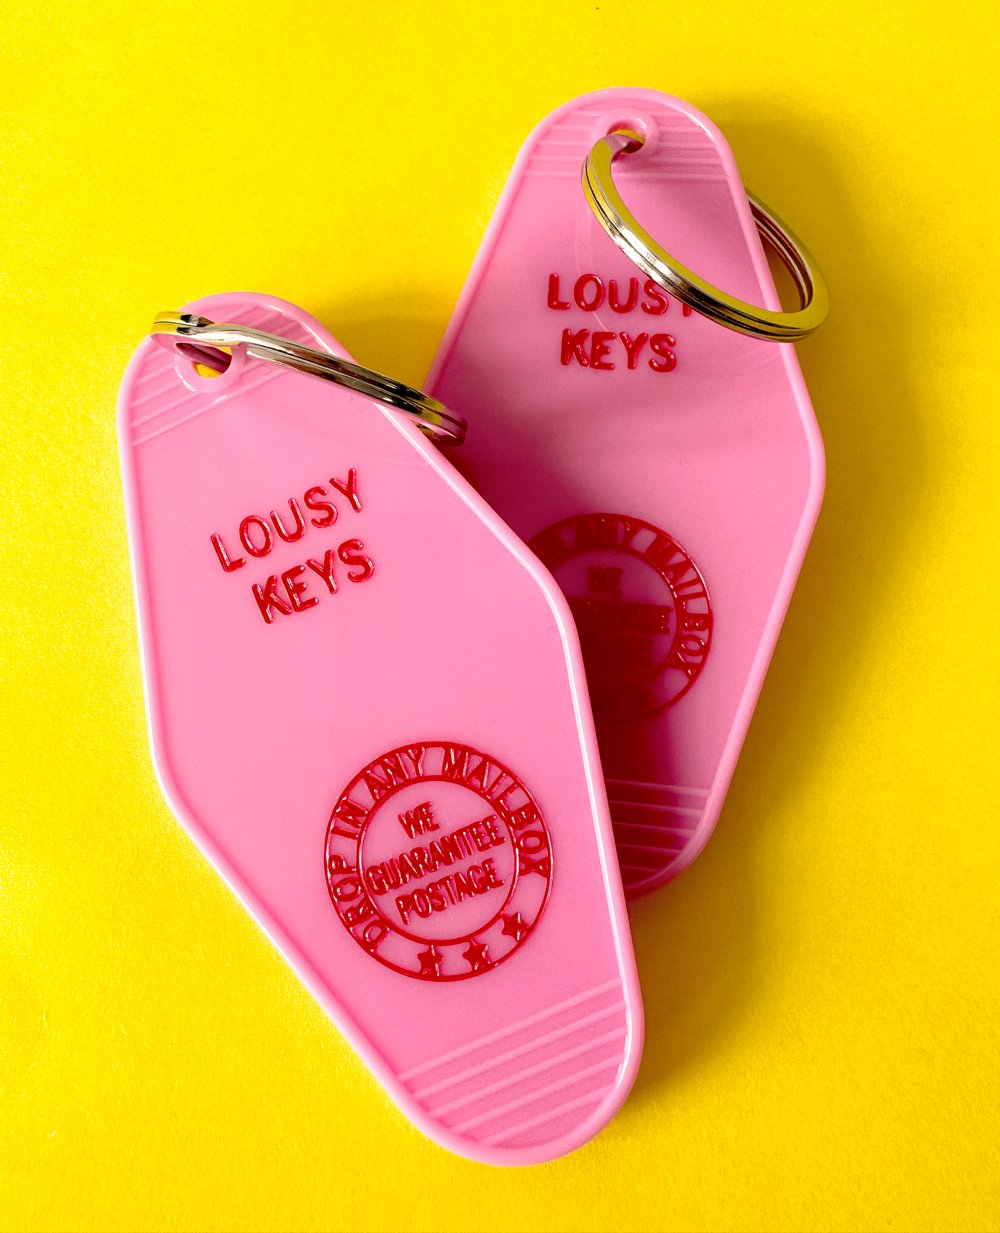 Lousy Keys Key Fob